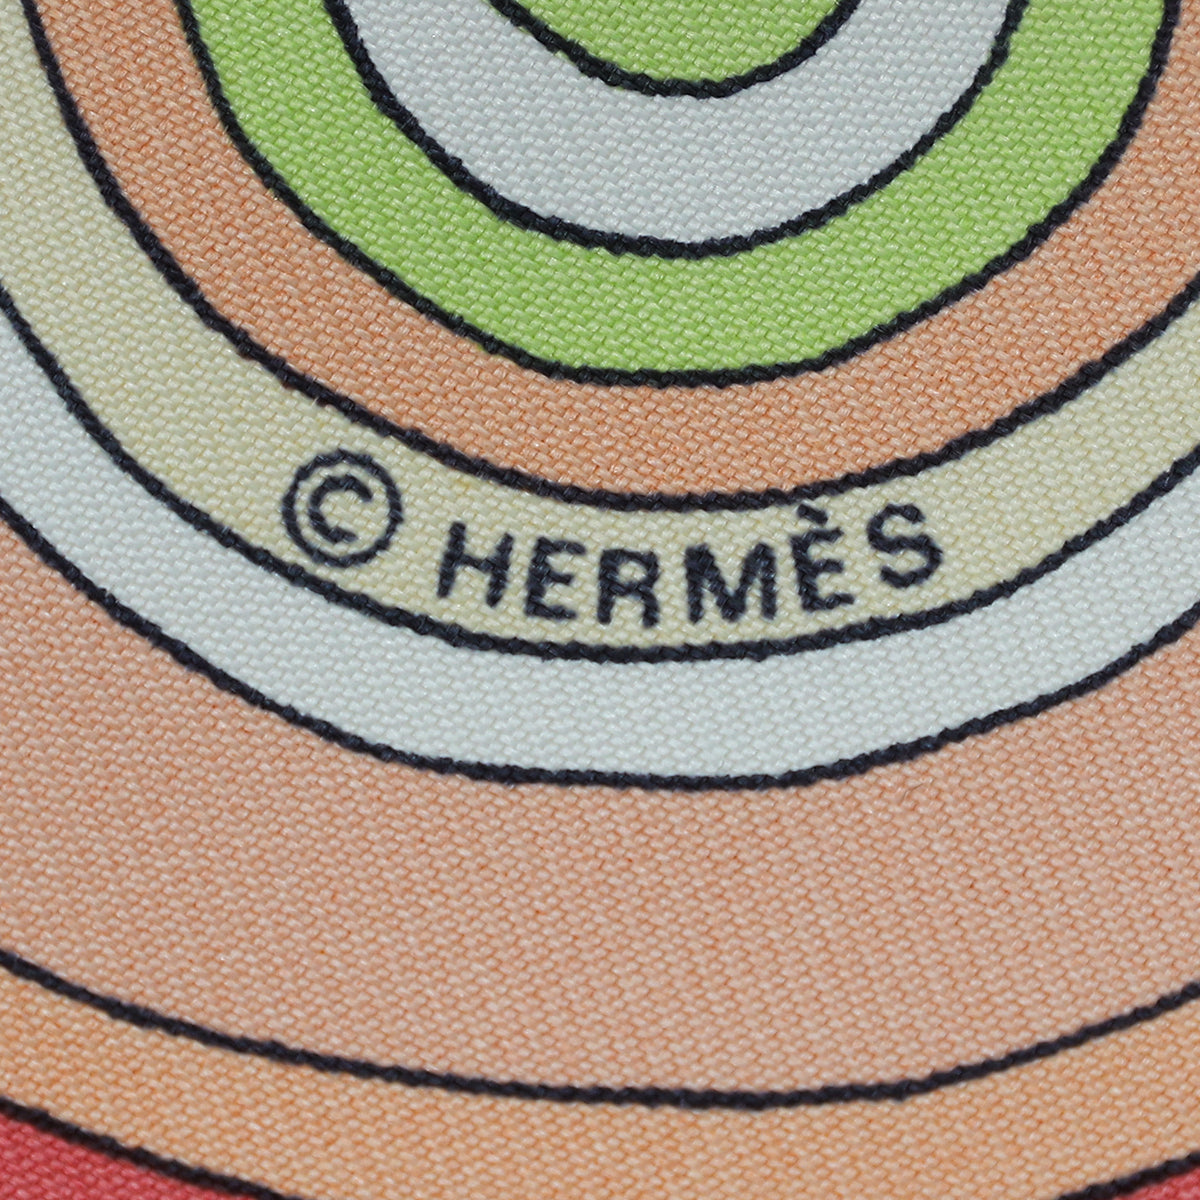 Hermes Multicolor 4 FBG Paris France Silk Scarf